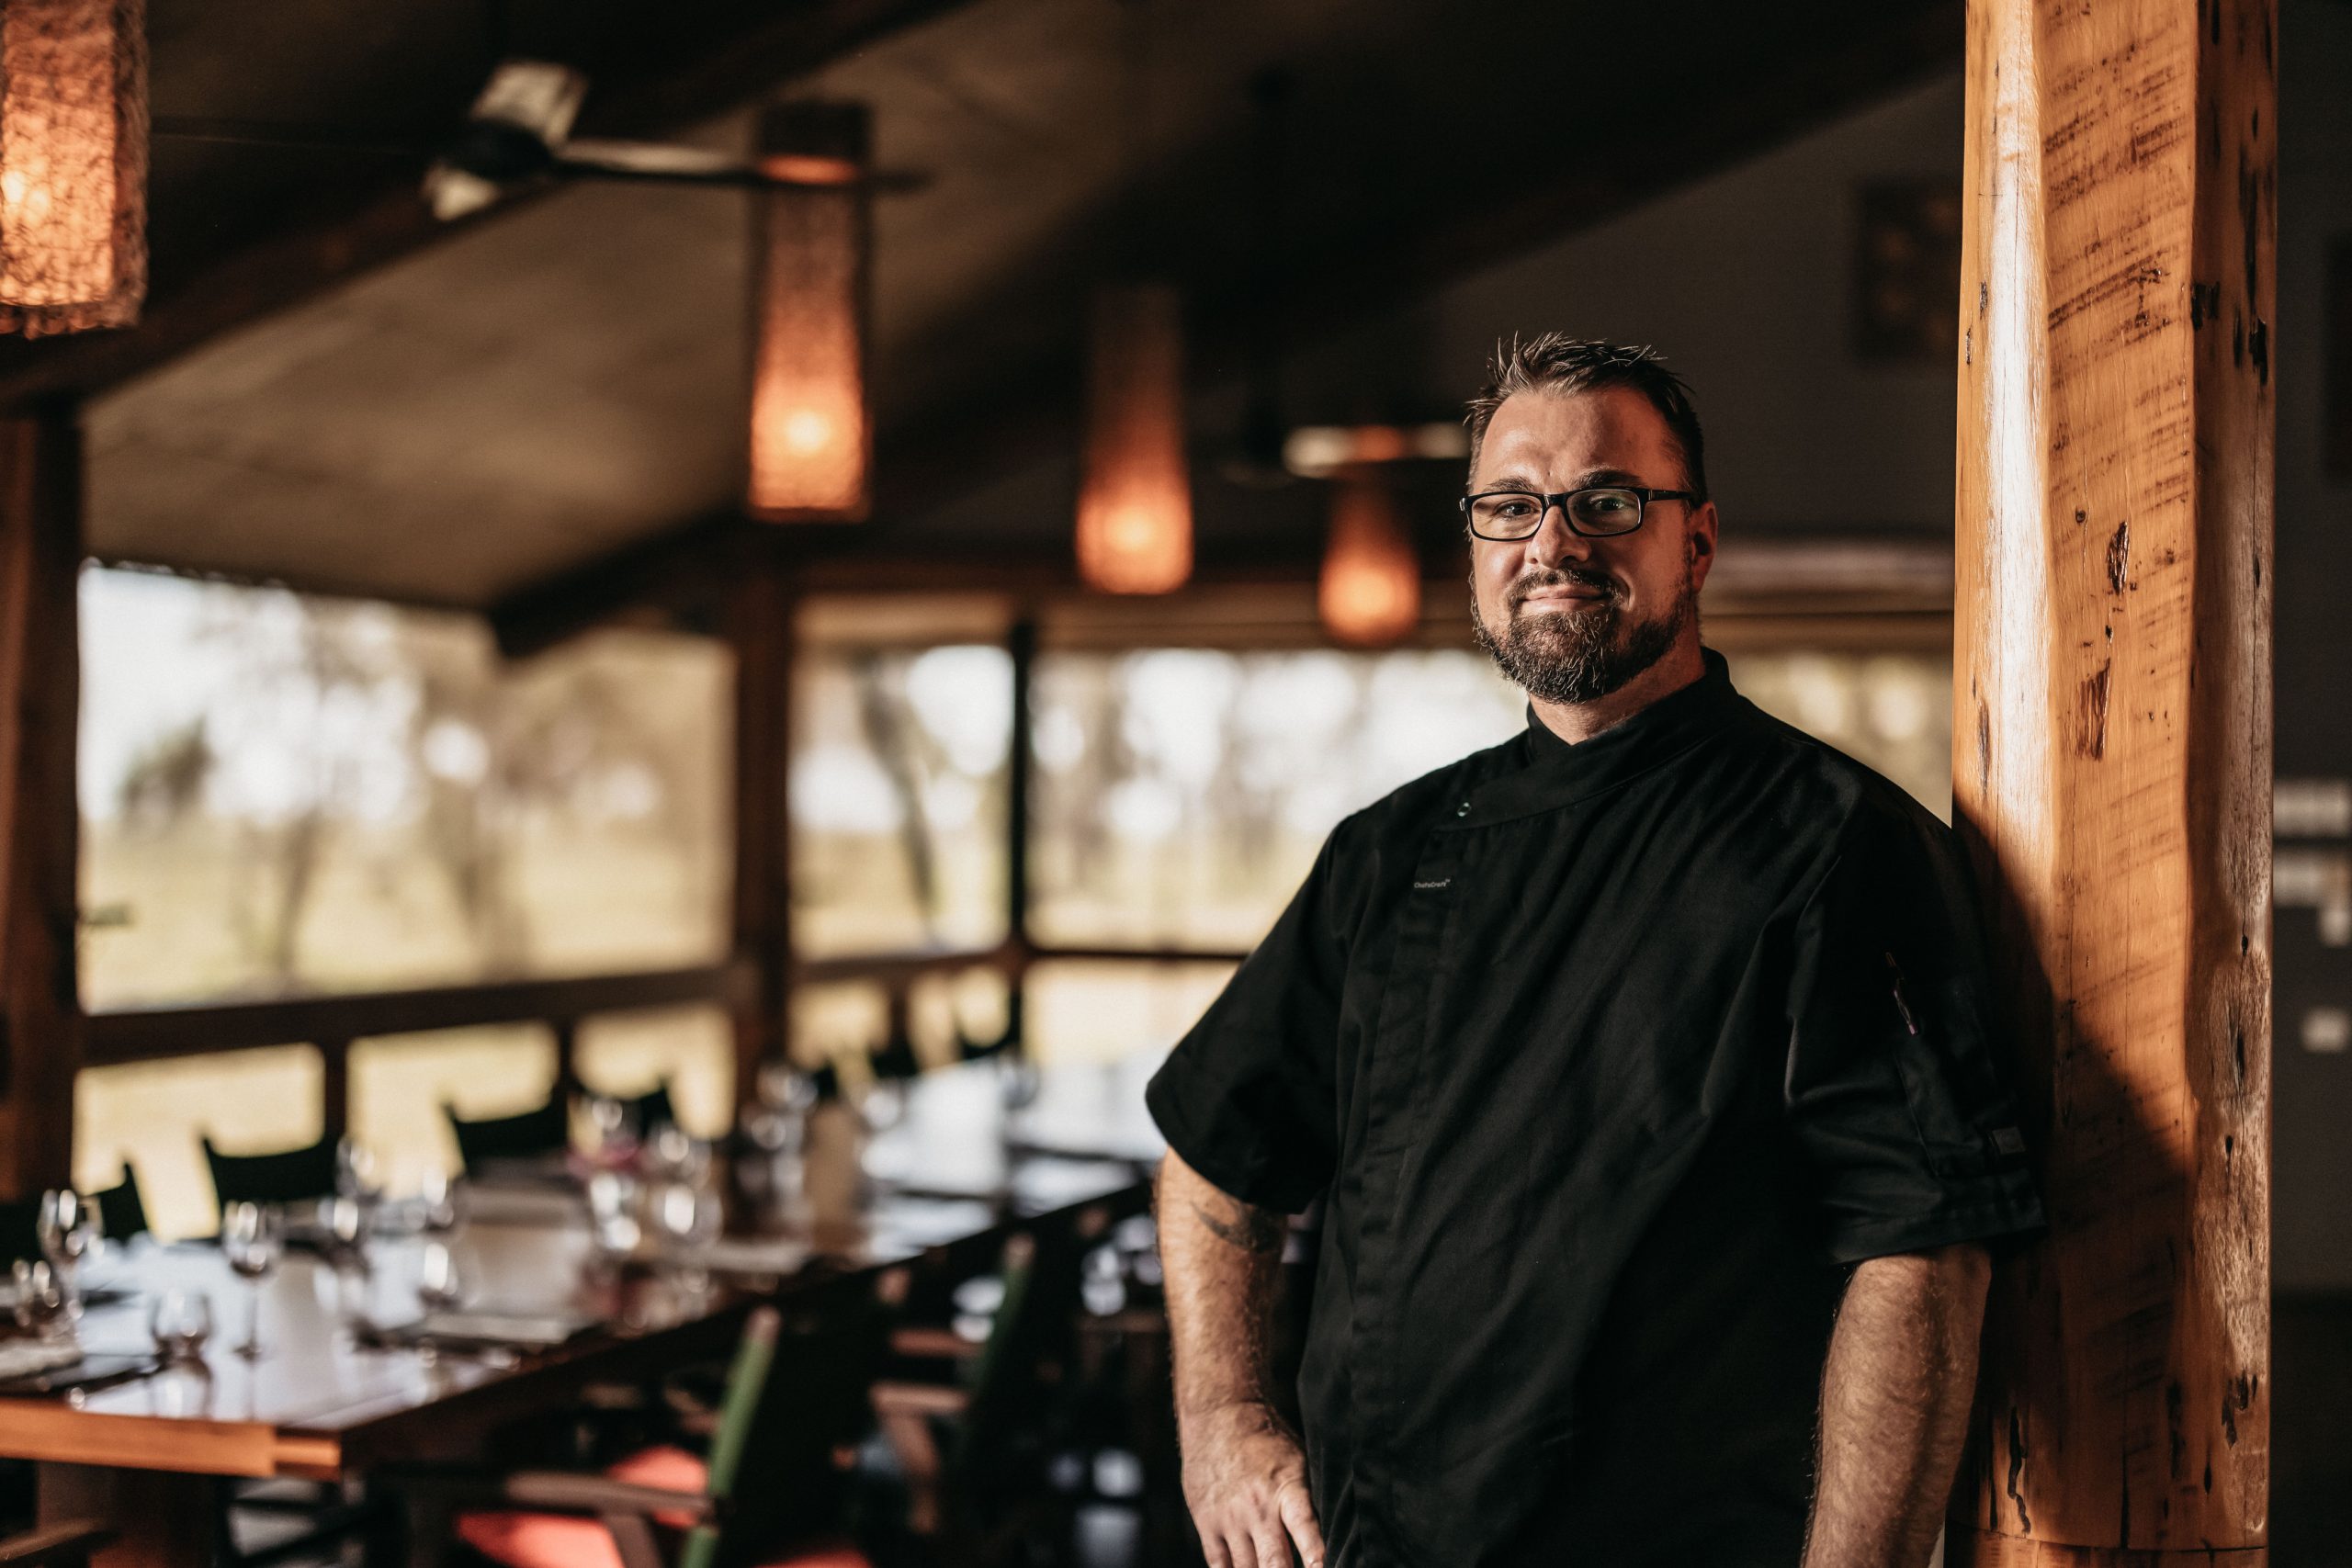 Meet Matthias Beer, Head Chef